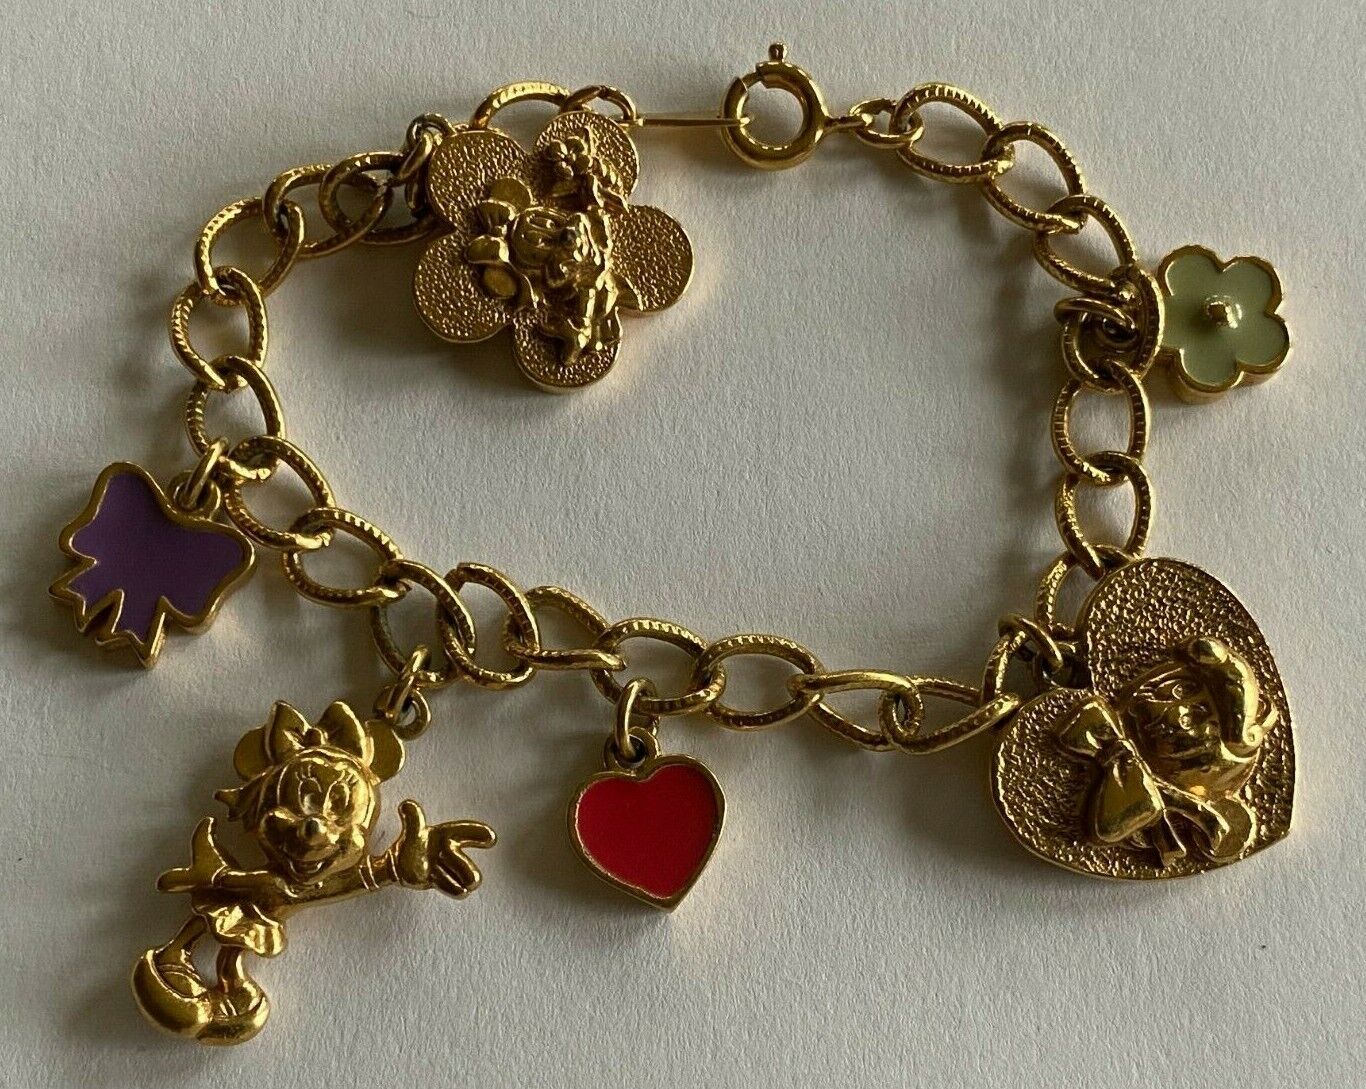 VTG Authentic Disney Minnie Best Friends Forever Heart Charm Bracelet Gold Tone